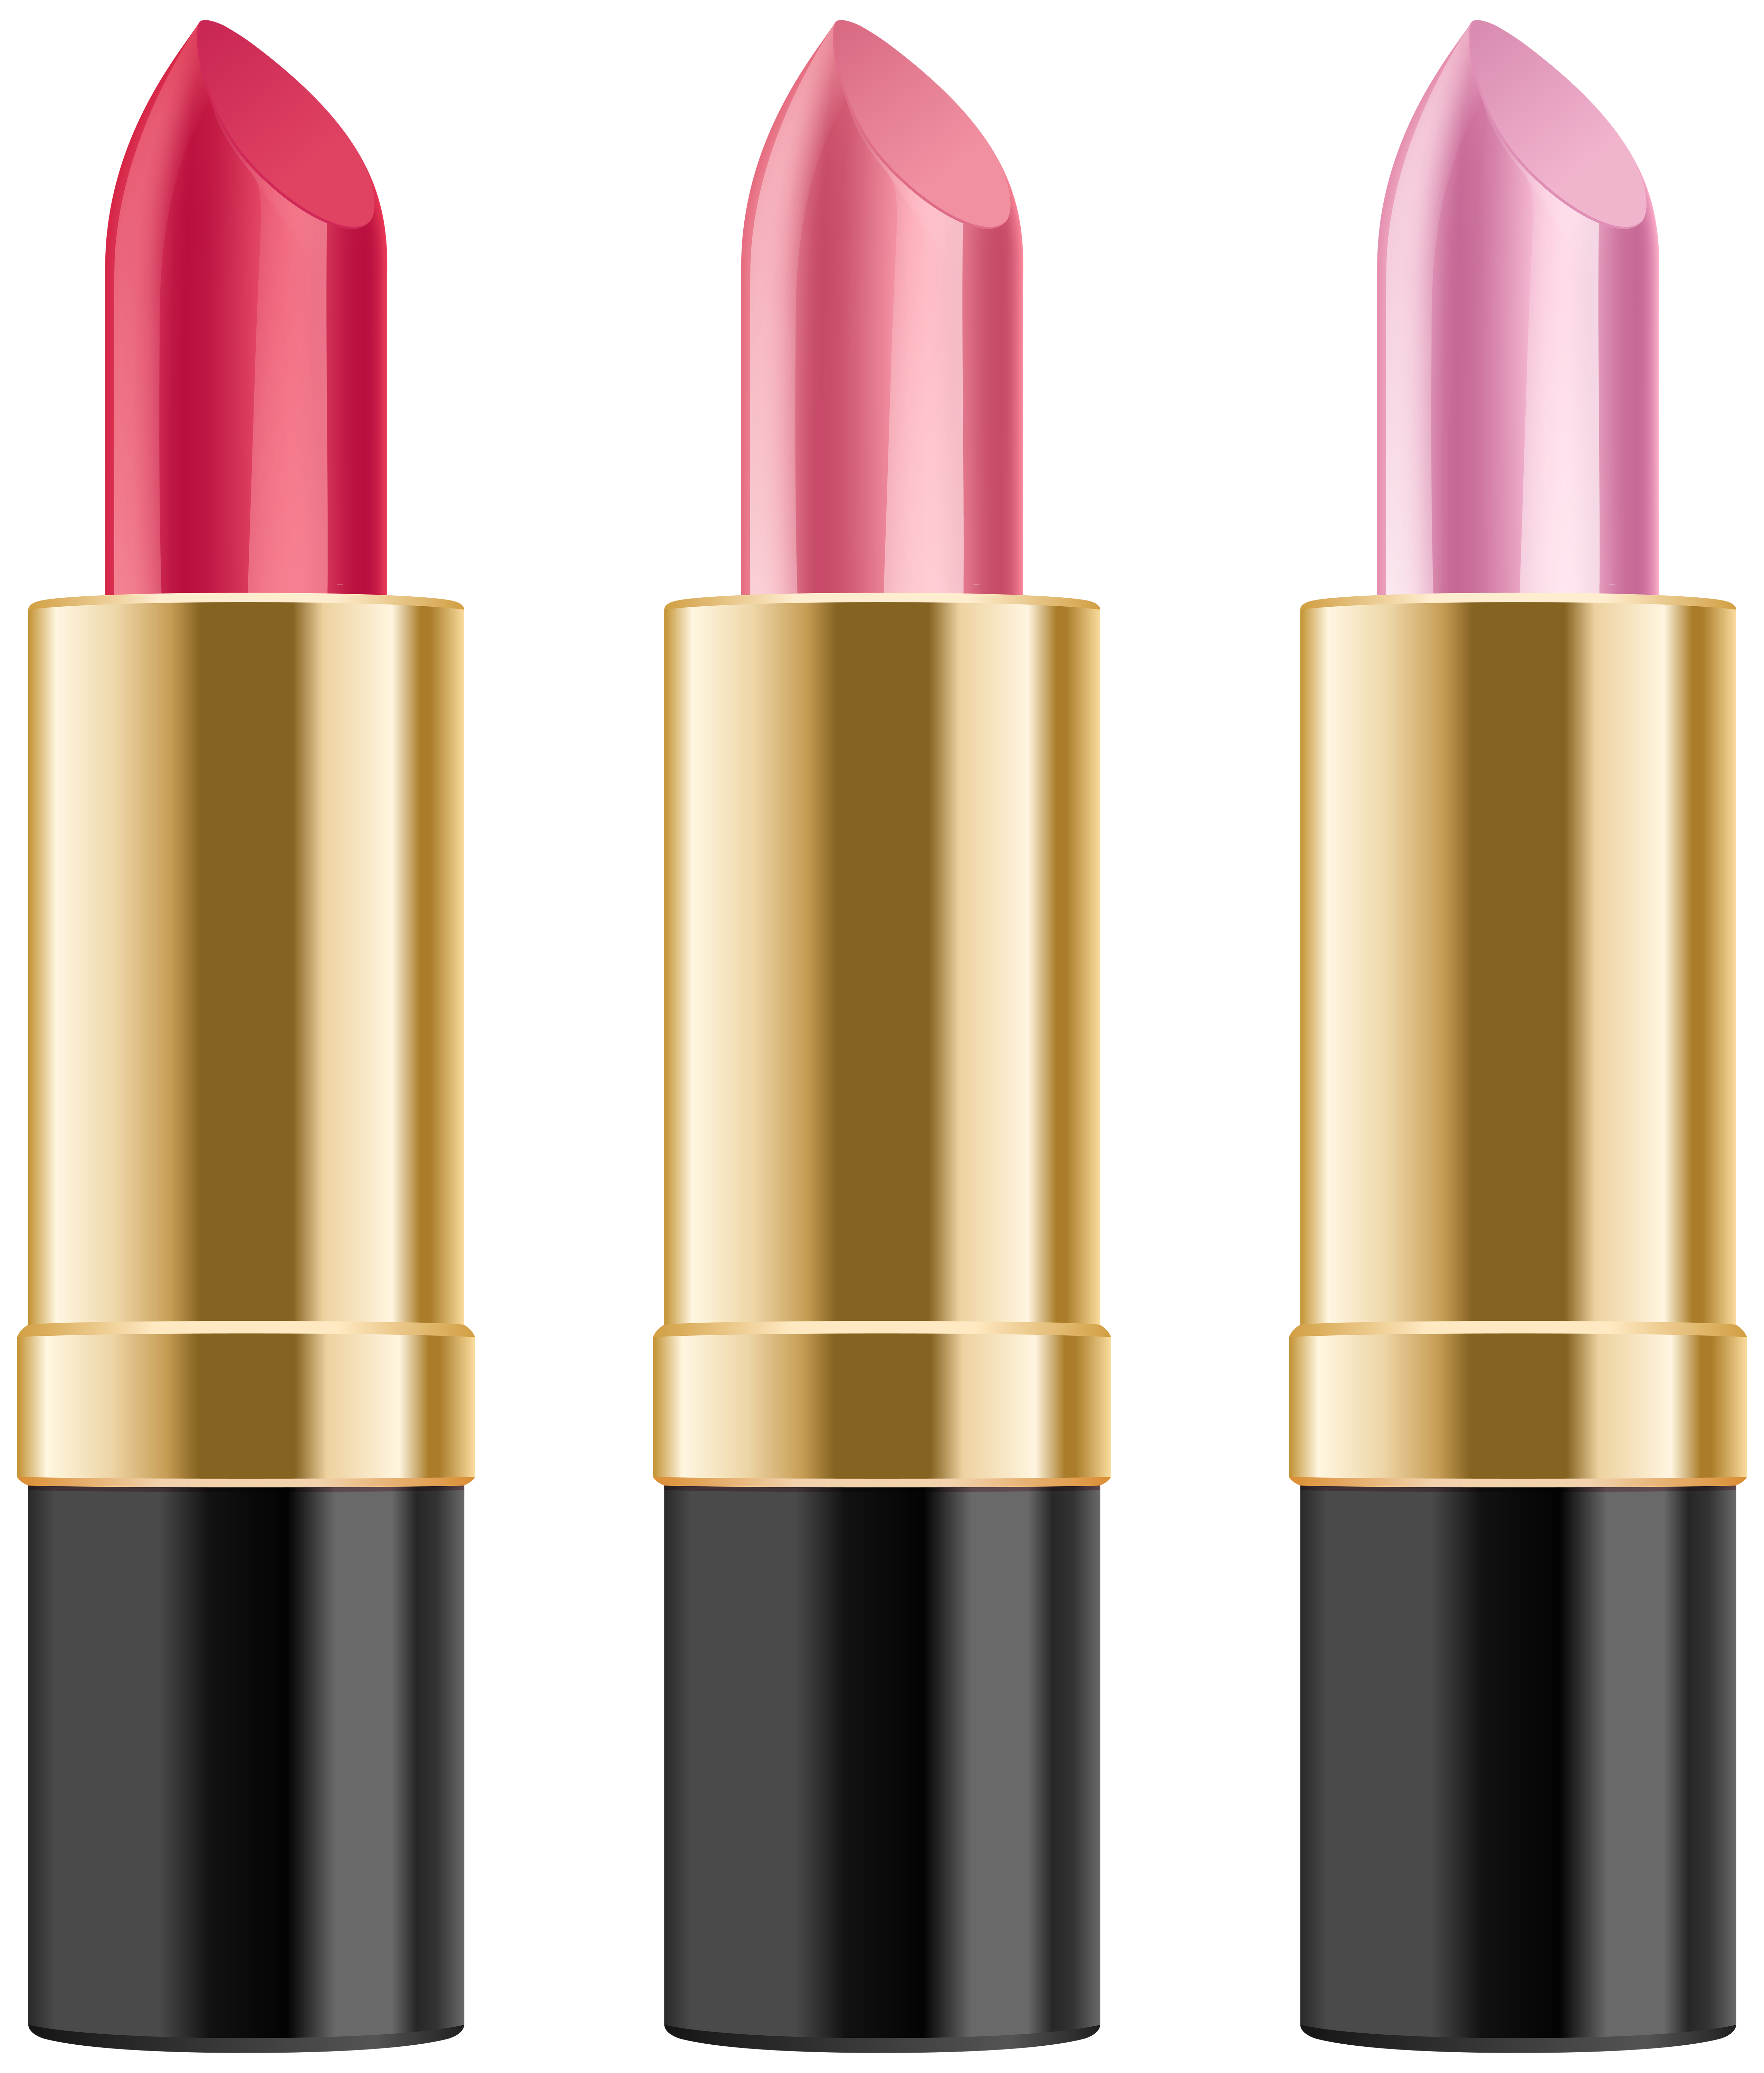 Lipstick Set PNG Clip Art Image.